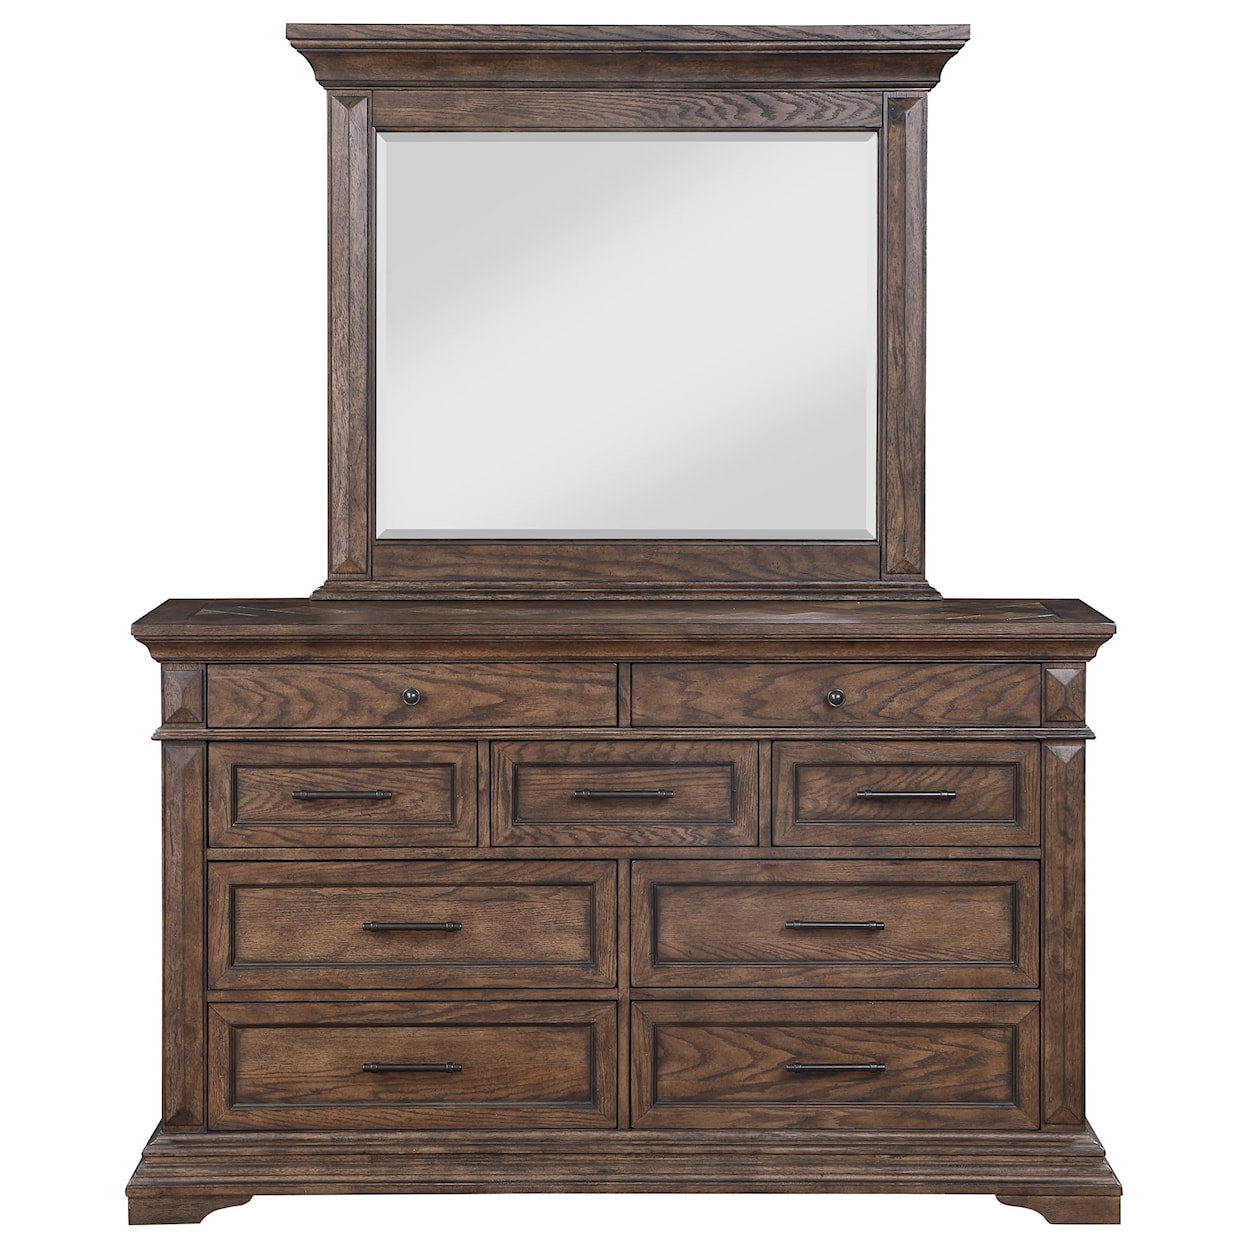 New Classic Furniture Mar Vista Dresser and Mirror Set